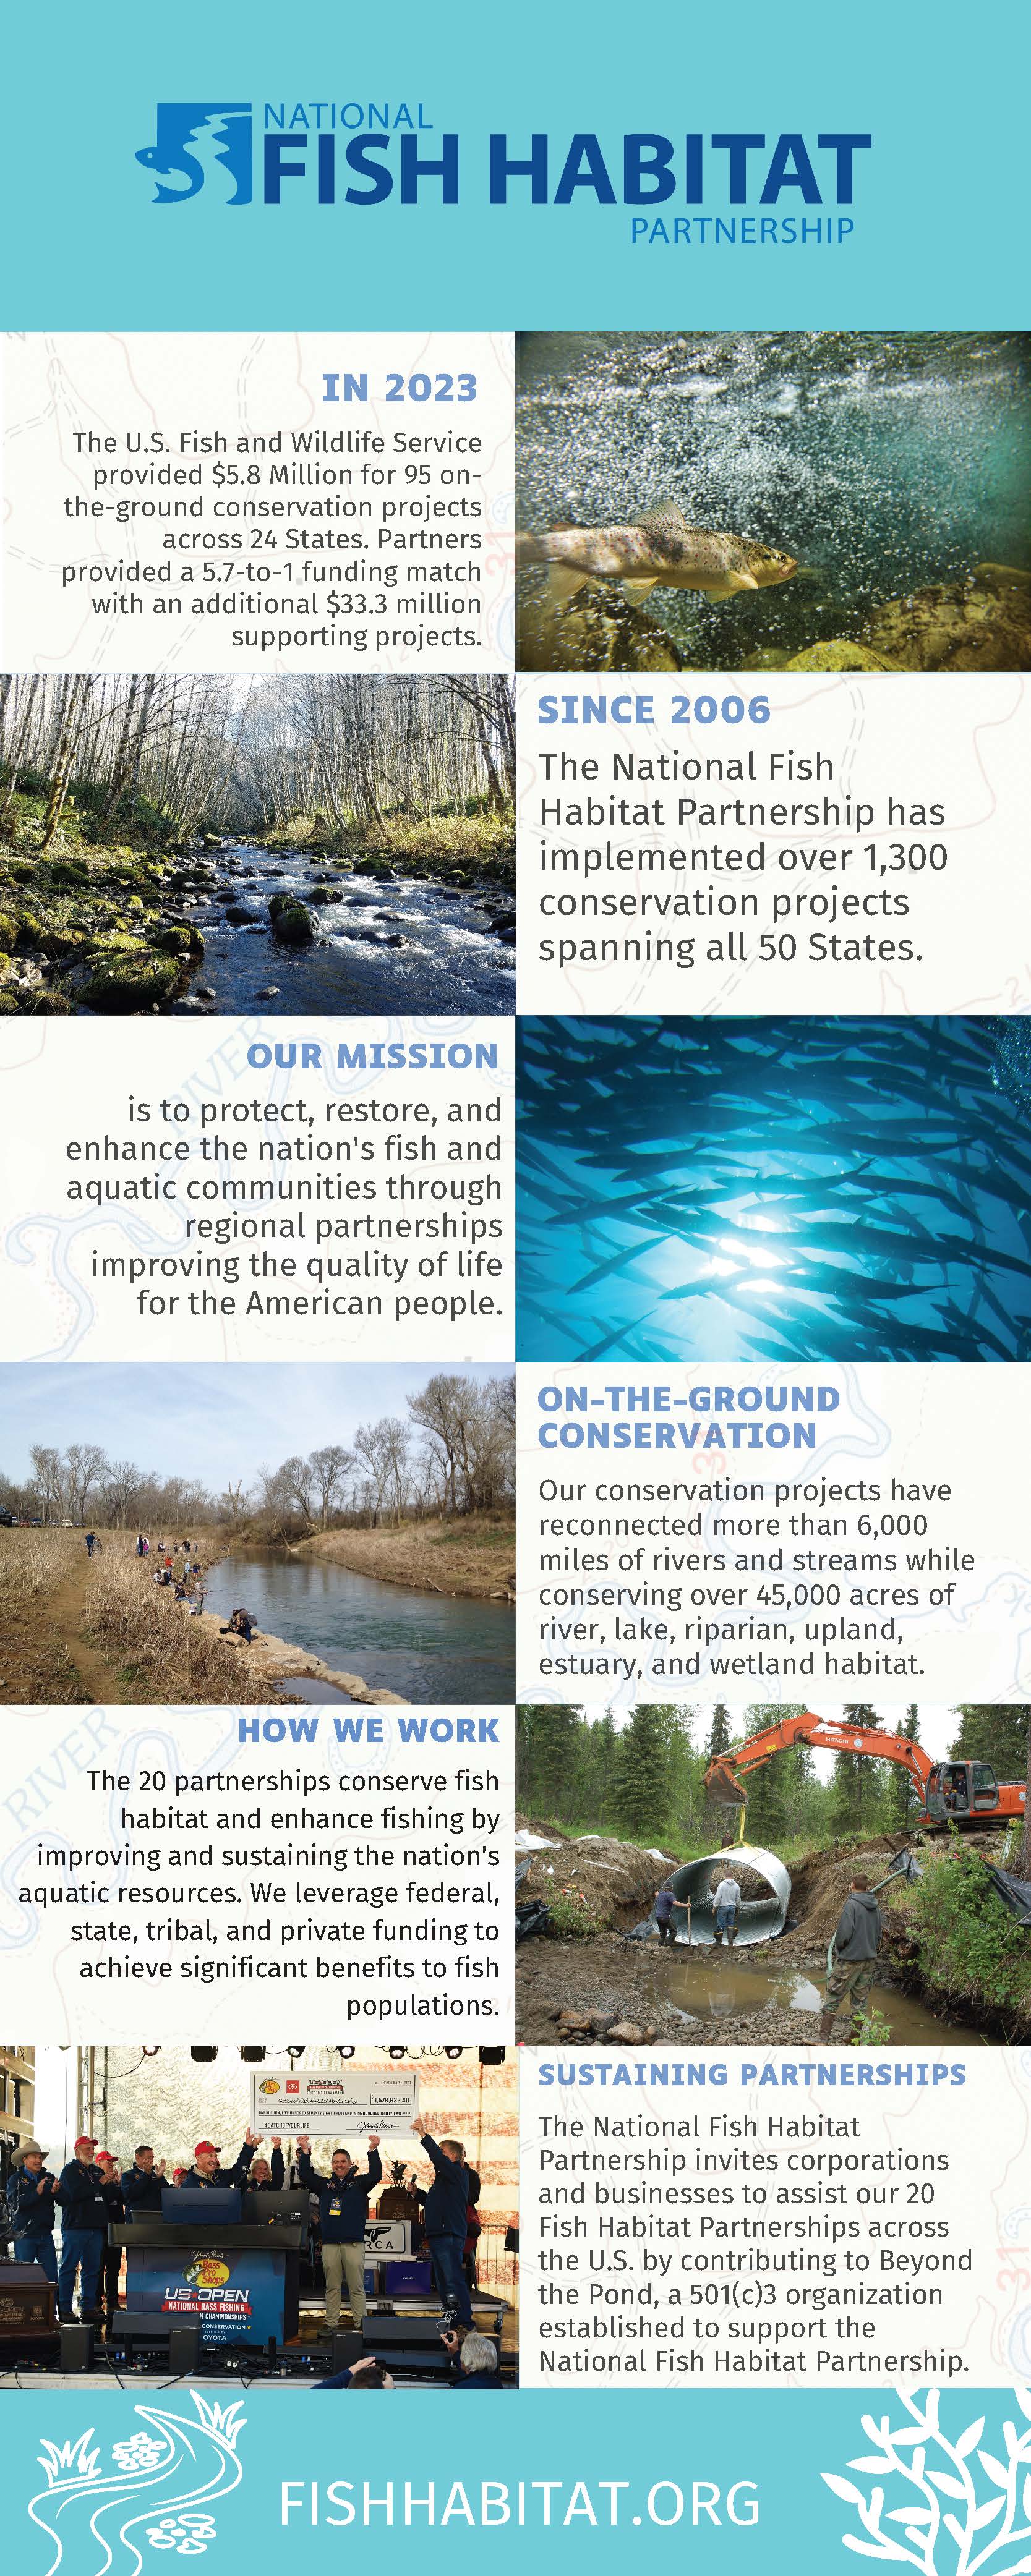 National Fish Habitat Partnership Releases 2023 Infographic